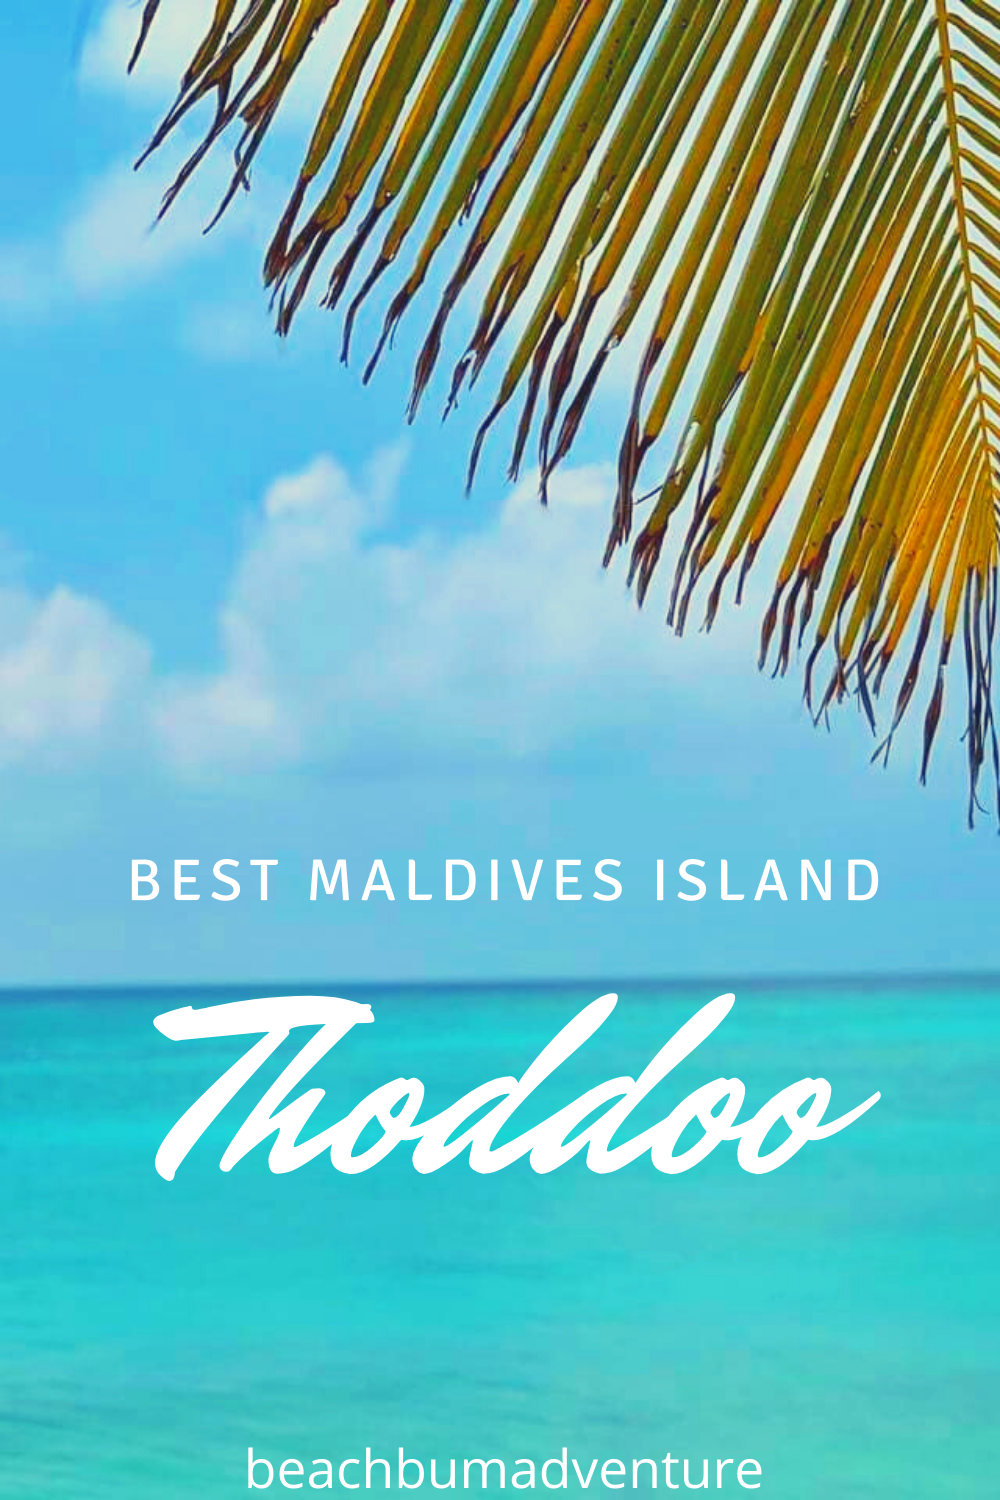 Thoddoo Best Island Maldives